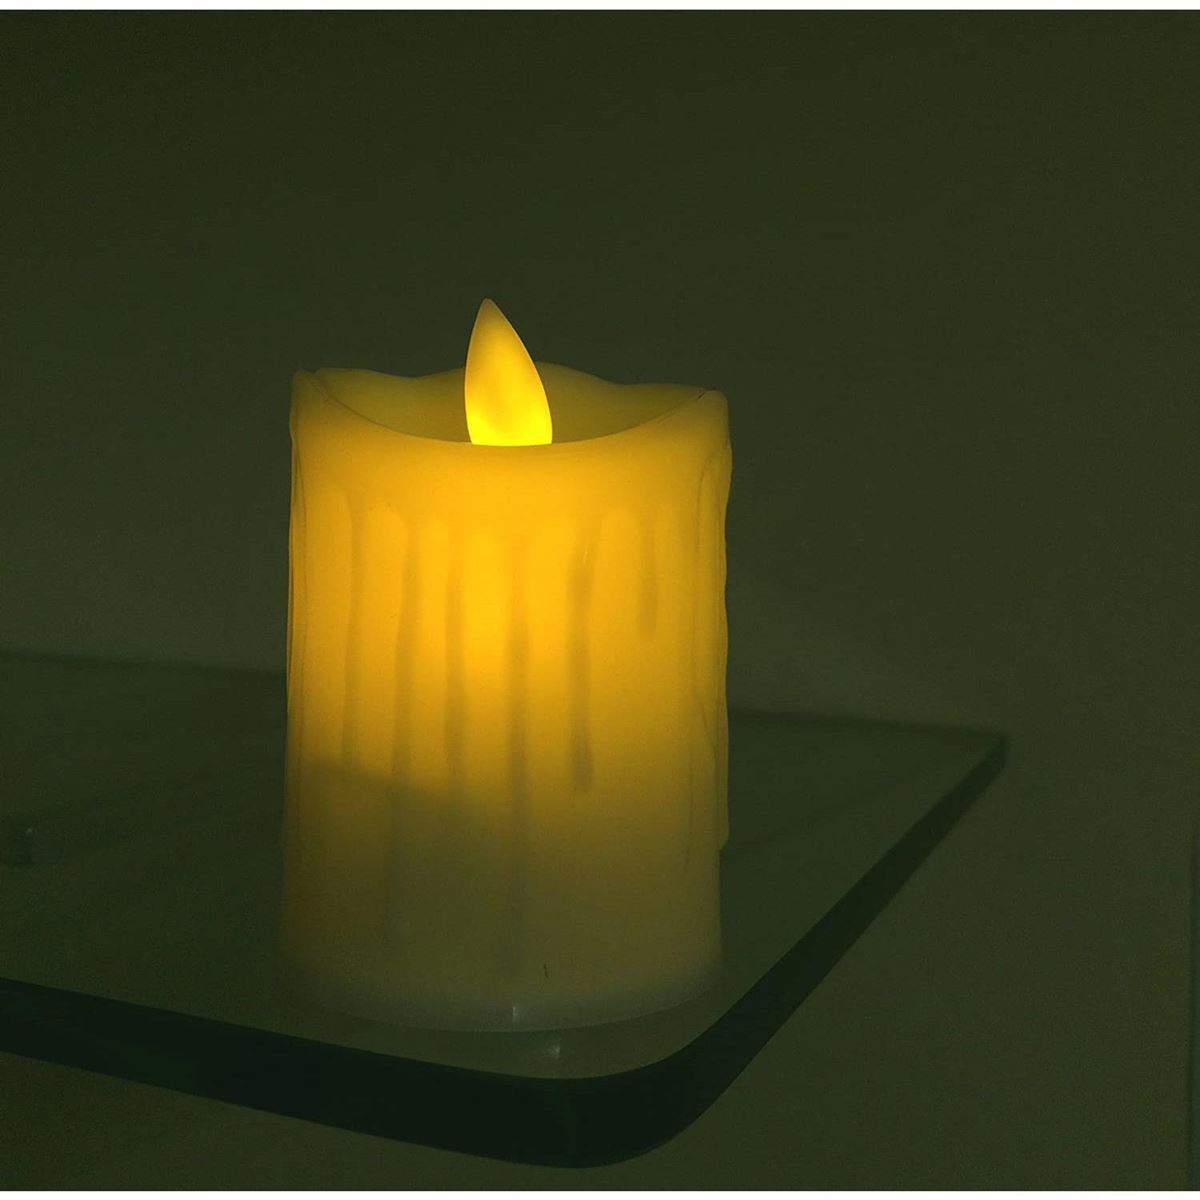 Kookee LED Light Flamless Plastic Tea Light Candles Set of 6 for Home decoration for Festival, Py, Celebration (6300)